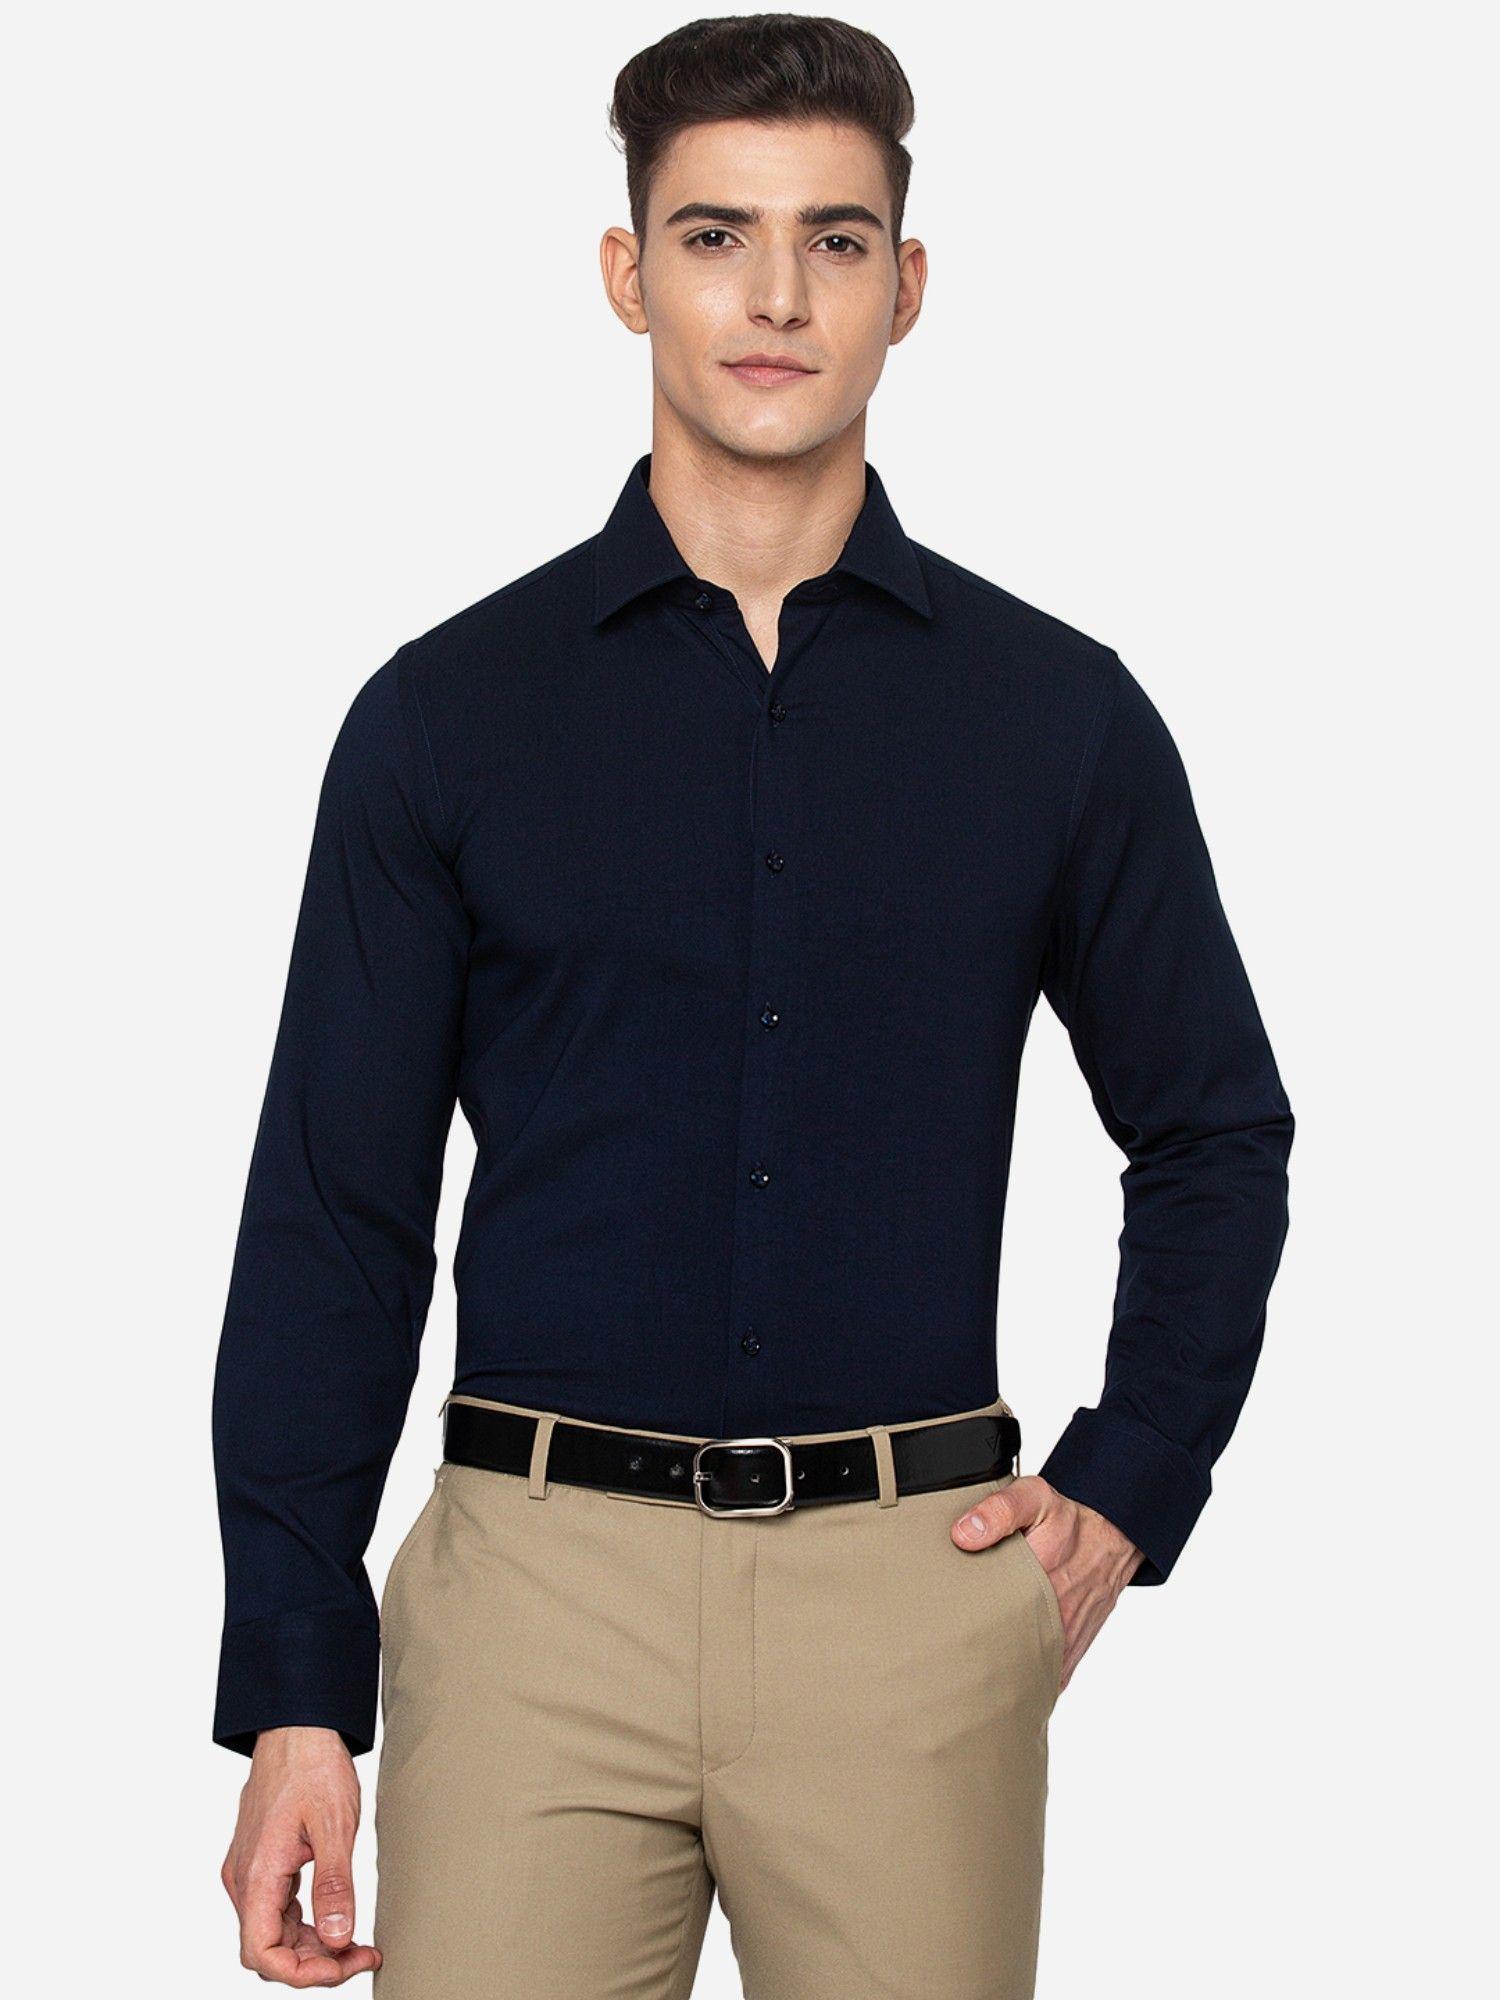 men navy blue cotton slim fit solid formal party wear shirt